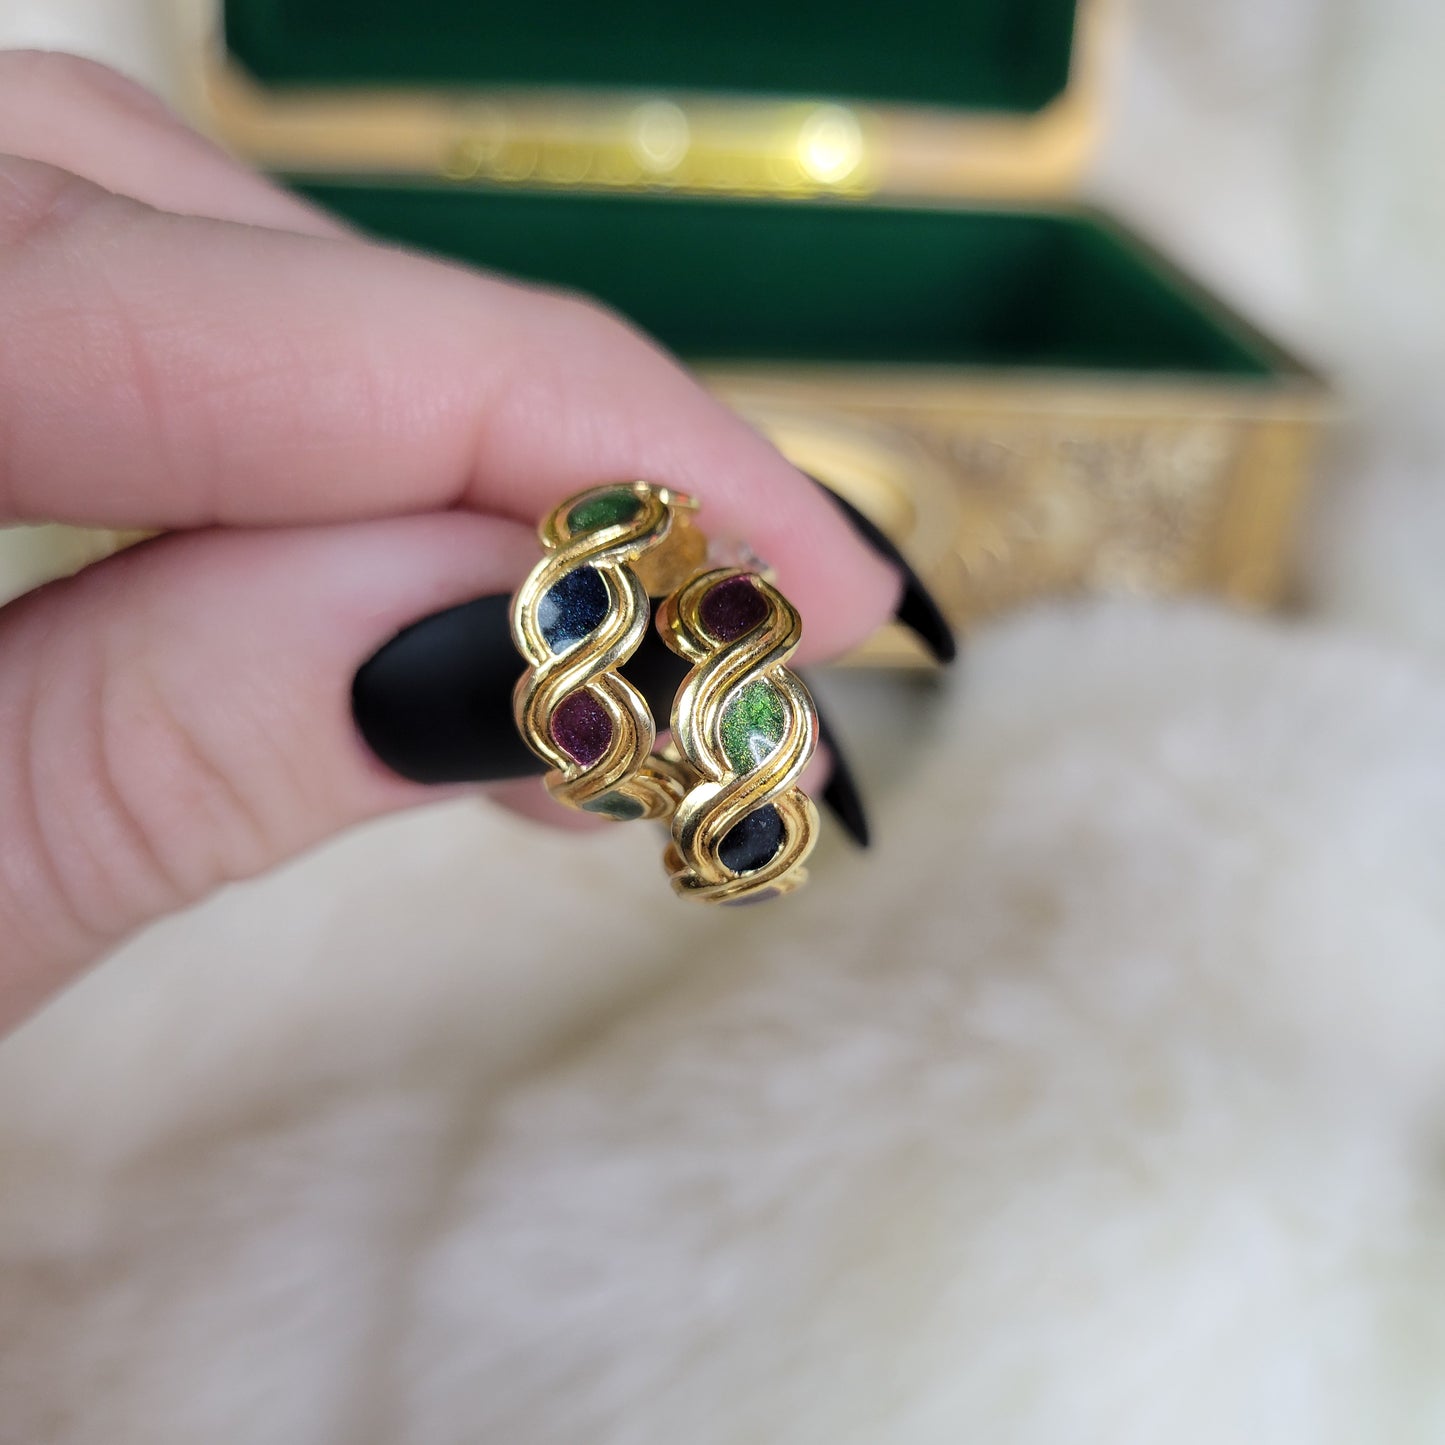 Small Gold Braided Vintage Hoop Earrings with Enamel Filled Details - Pierced